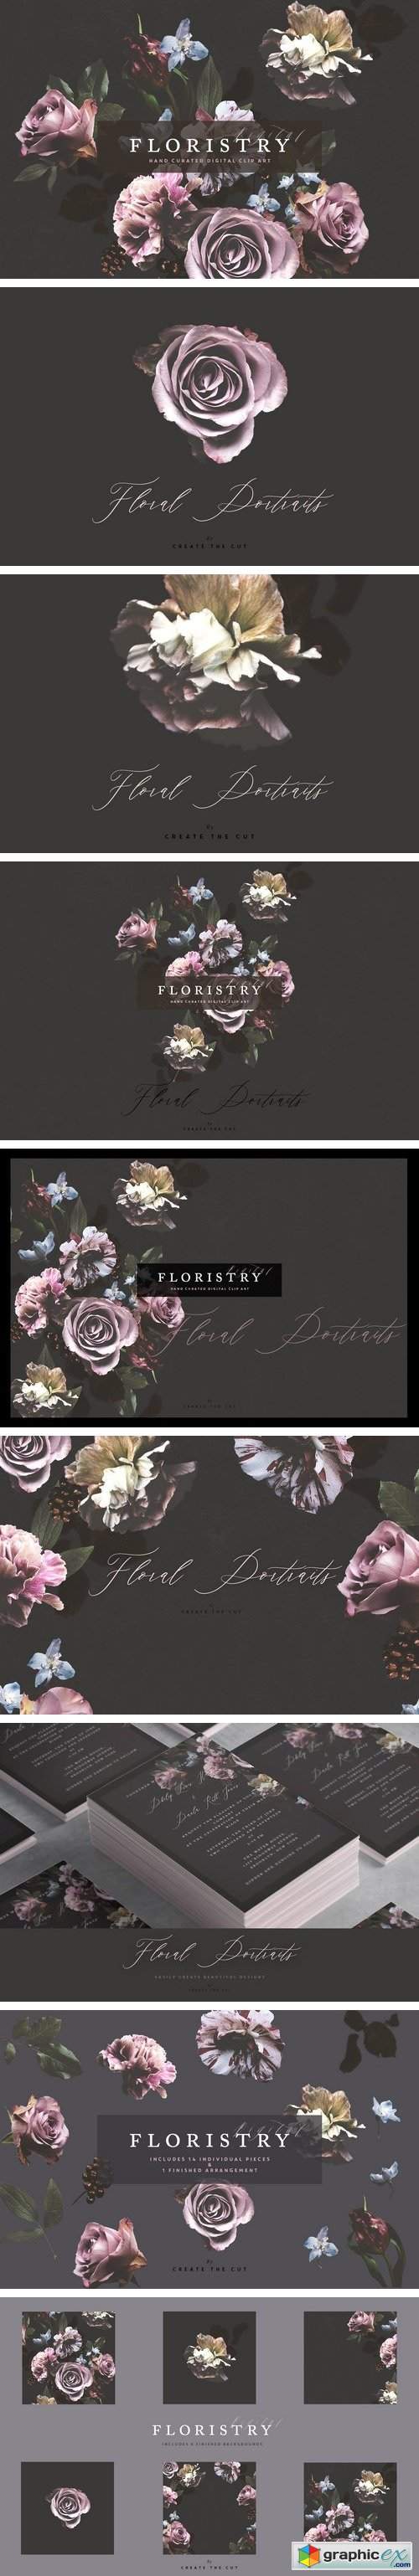 Digital Floristry - Floral Portraits